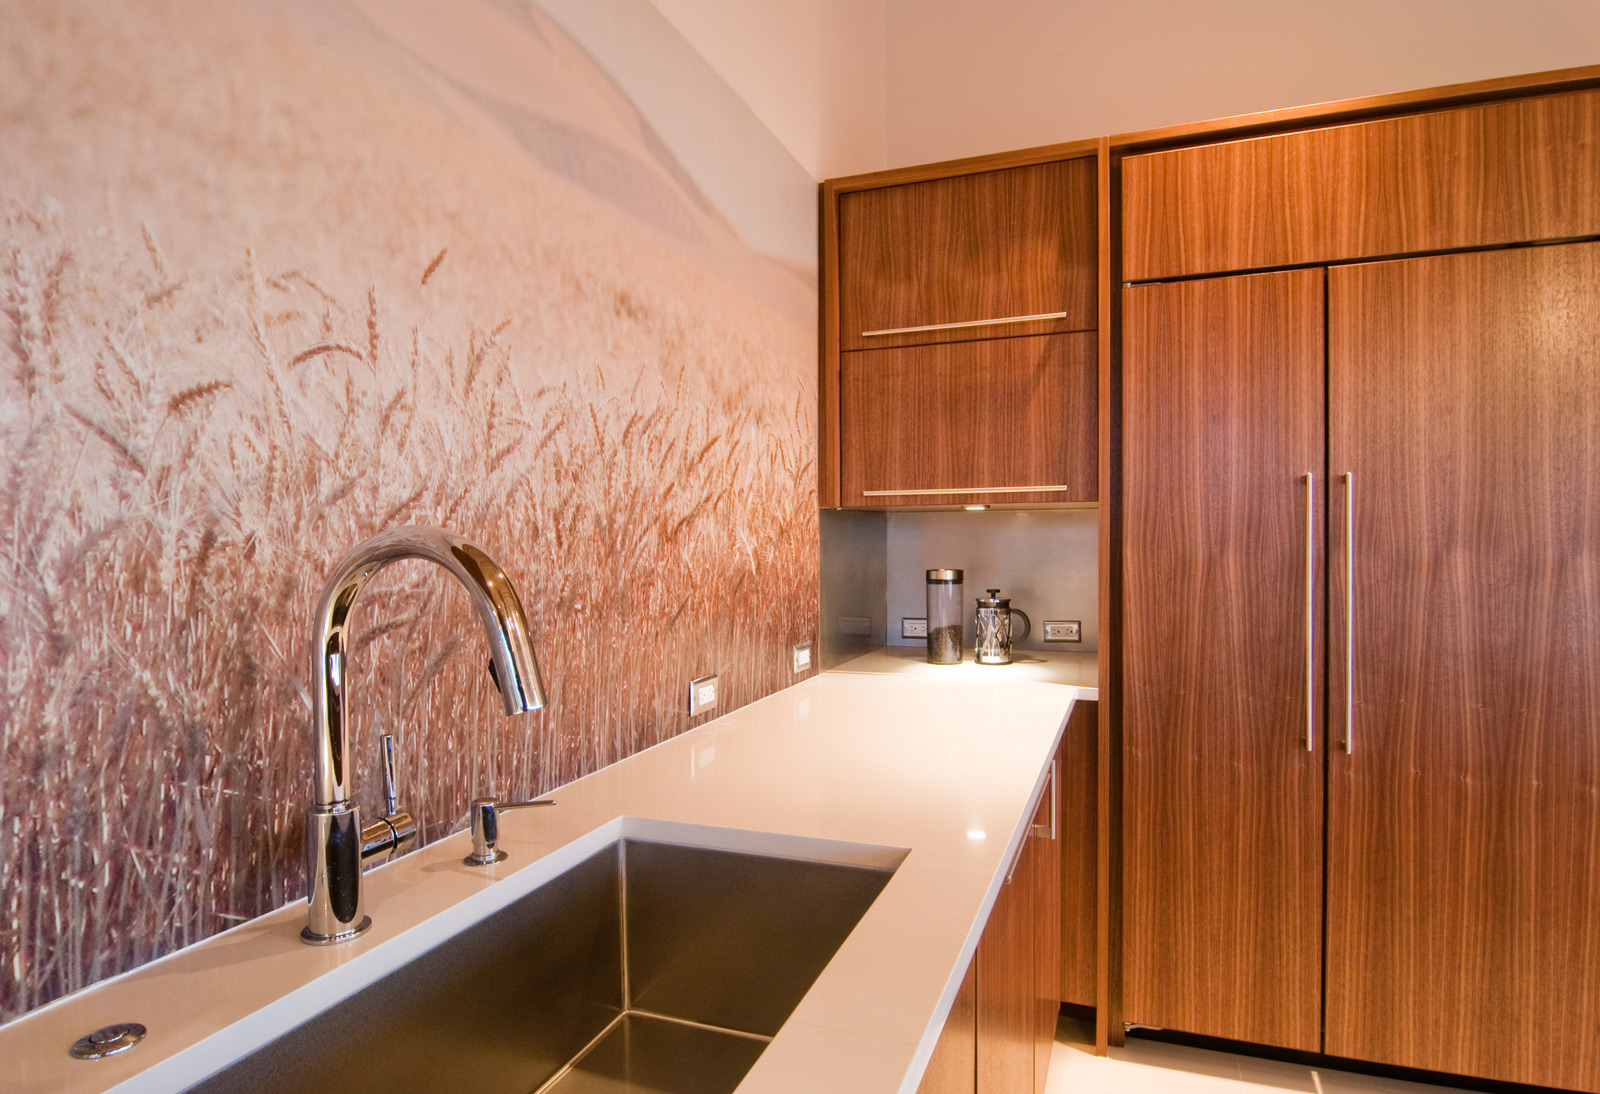 modern kitchen wallpaper designs,property,room,countertop,interior design,building